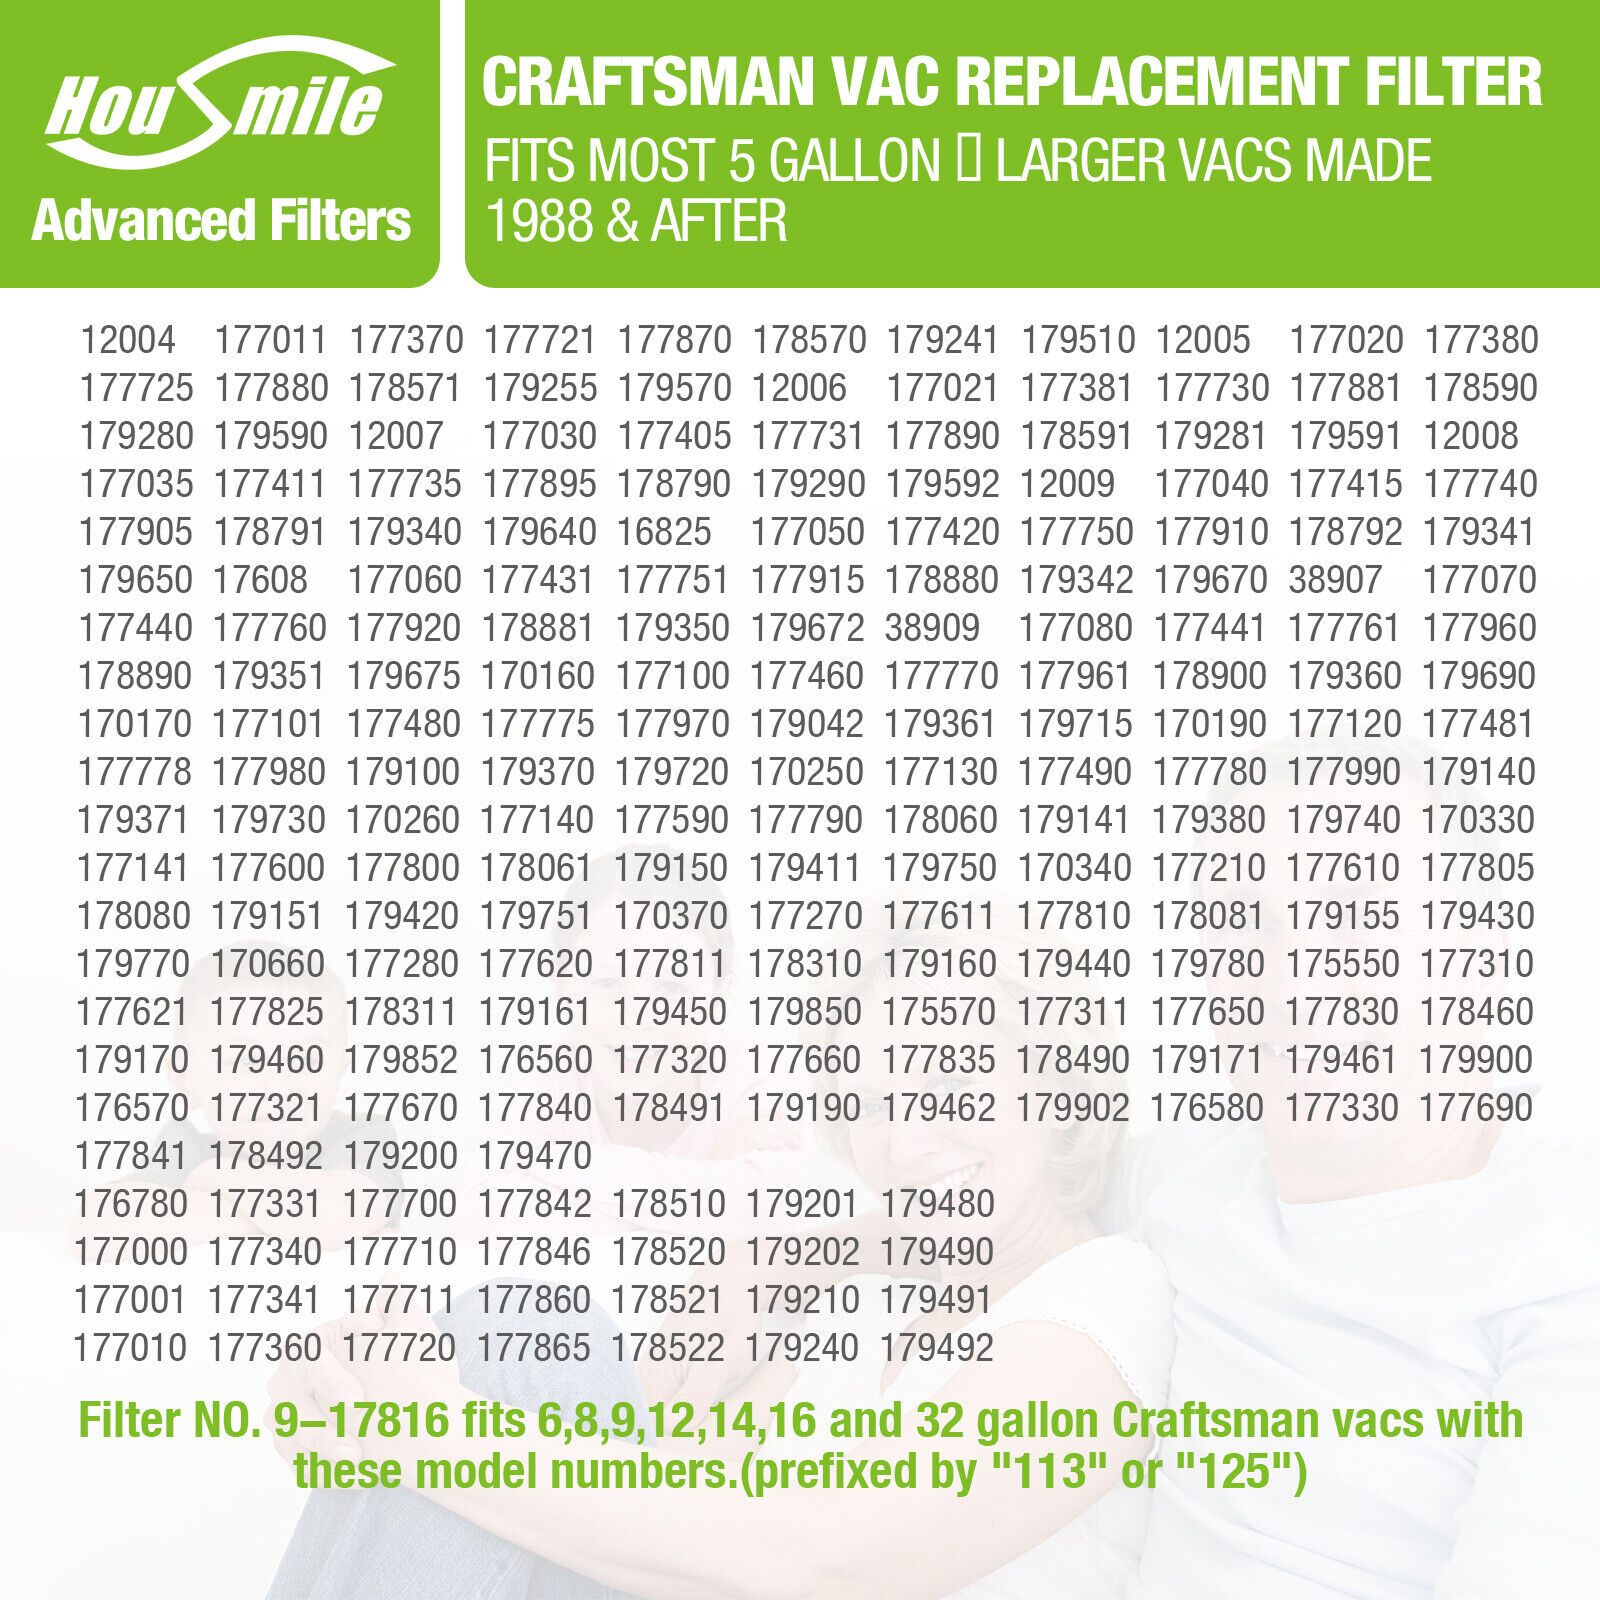 Vacuum Cleaner Cartridge Filter for Shop Vac Craftsman 9-17816 Wet Dry Air Filte Housmile - фотография #7